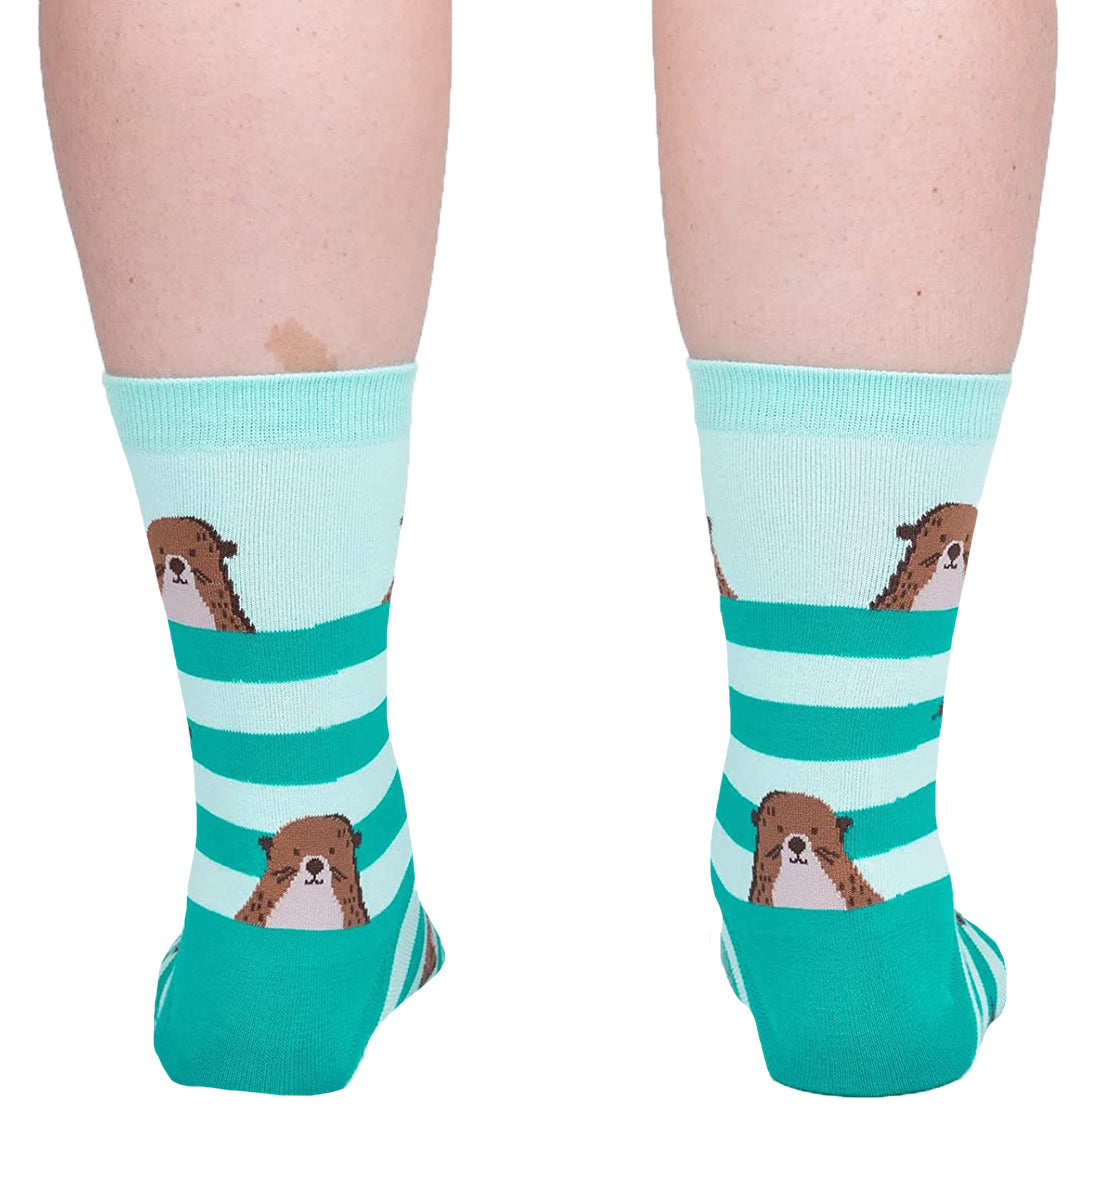 SOCK it to me Women's Crew Socks (W0393),My Otter Foot - My Otter Foot,One Size